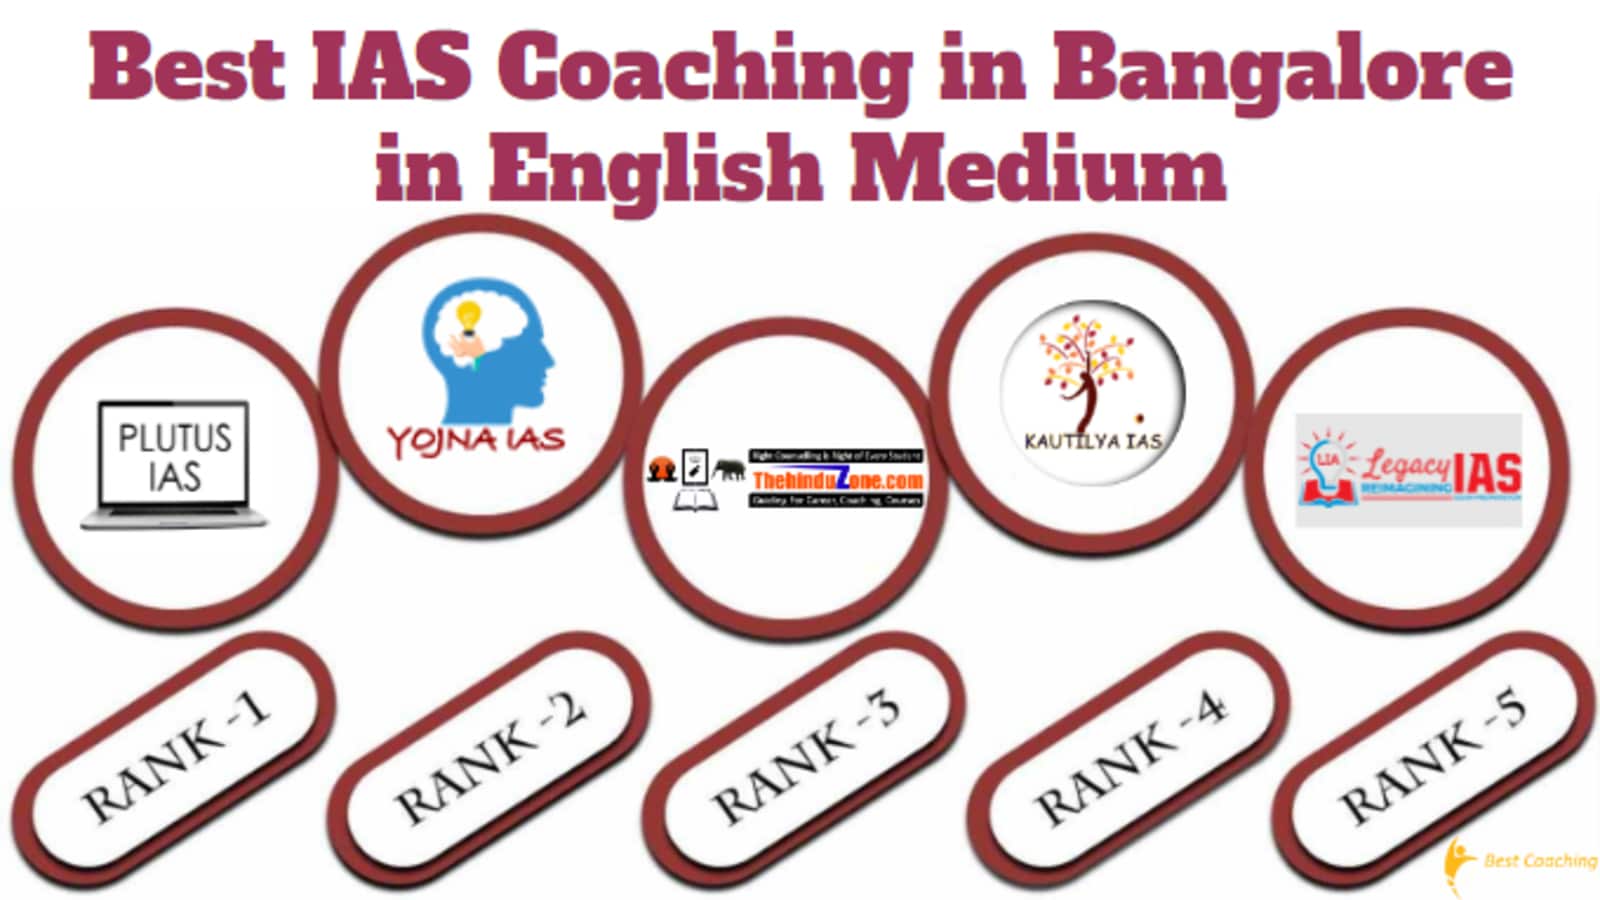 Top IAS Coaching in Bangalore in English Medium